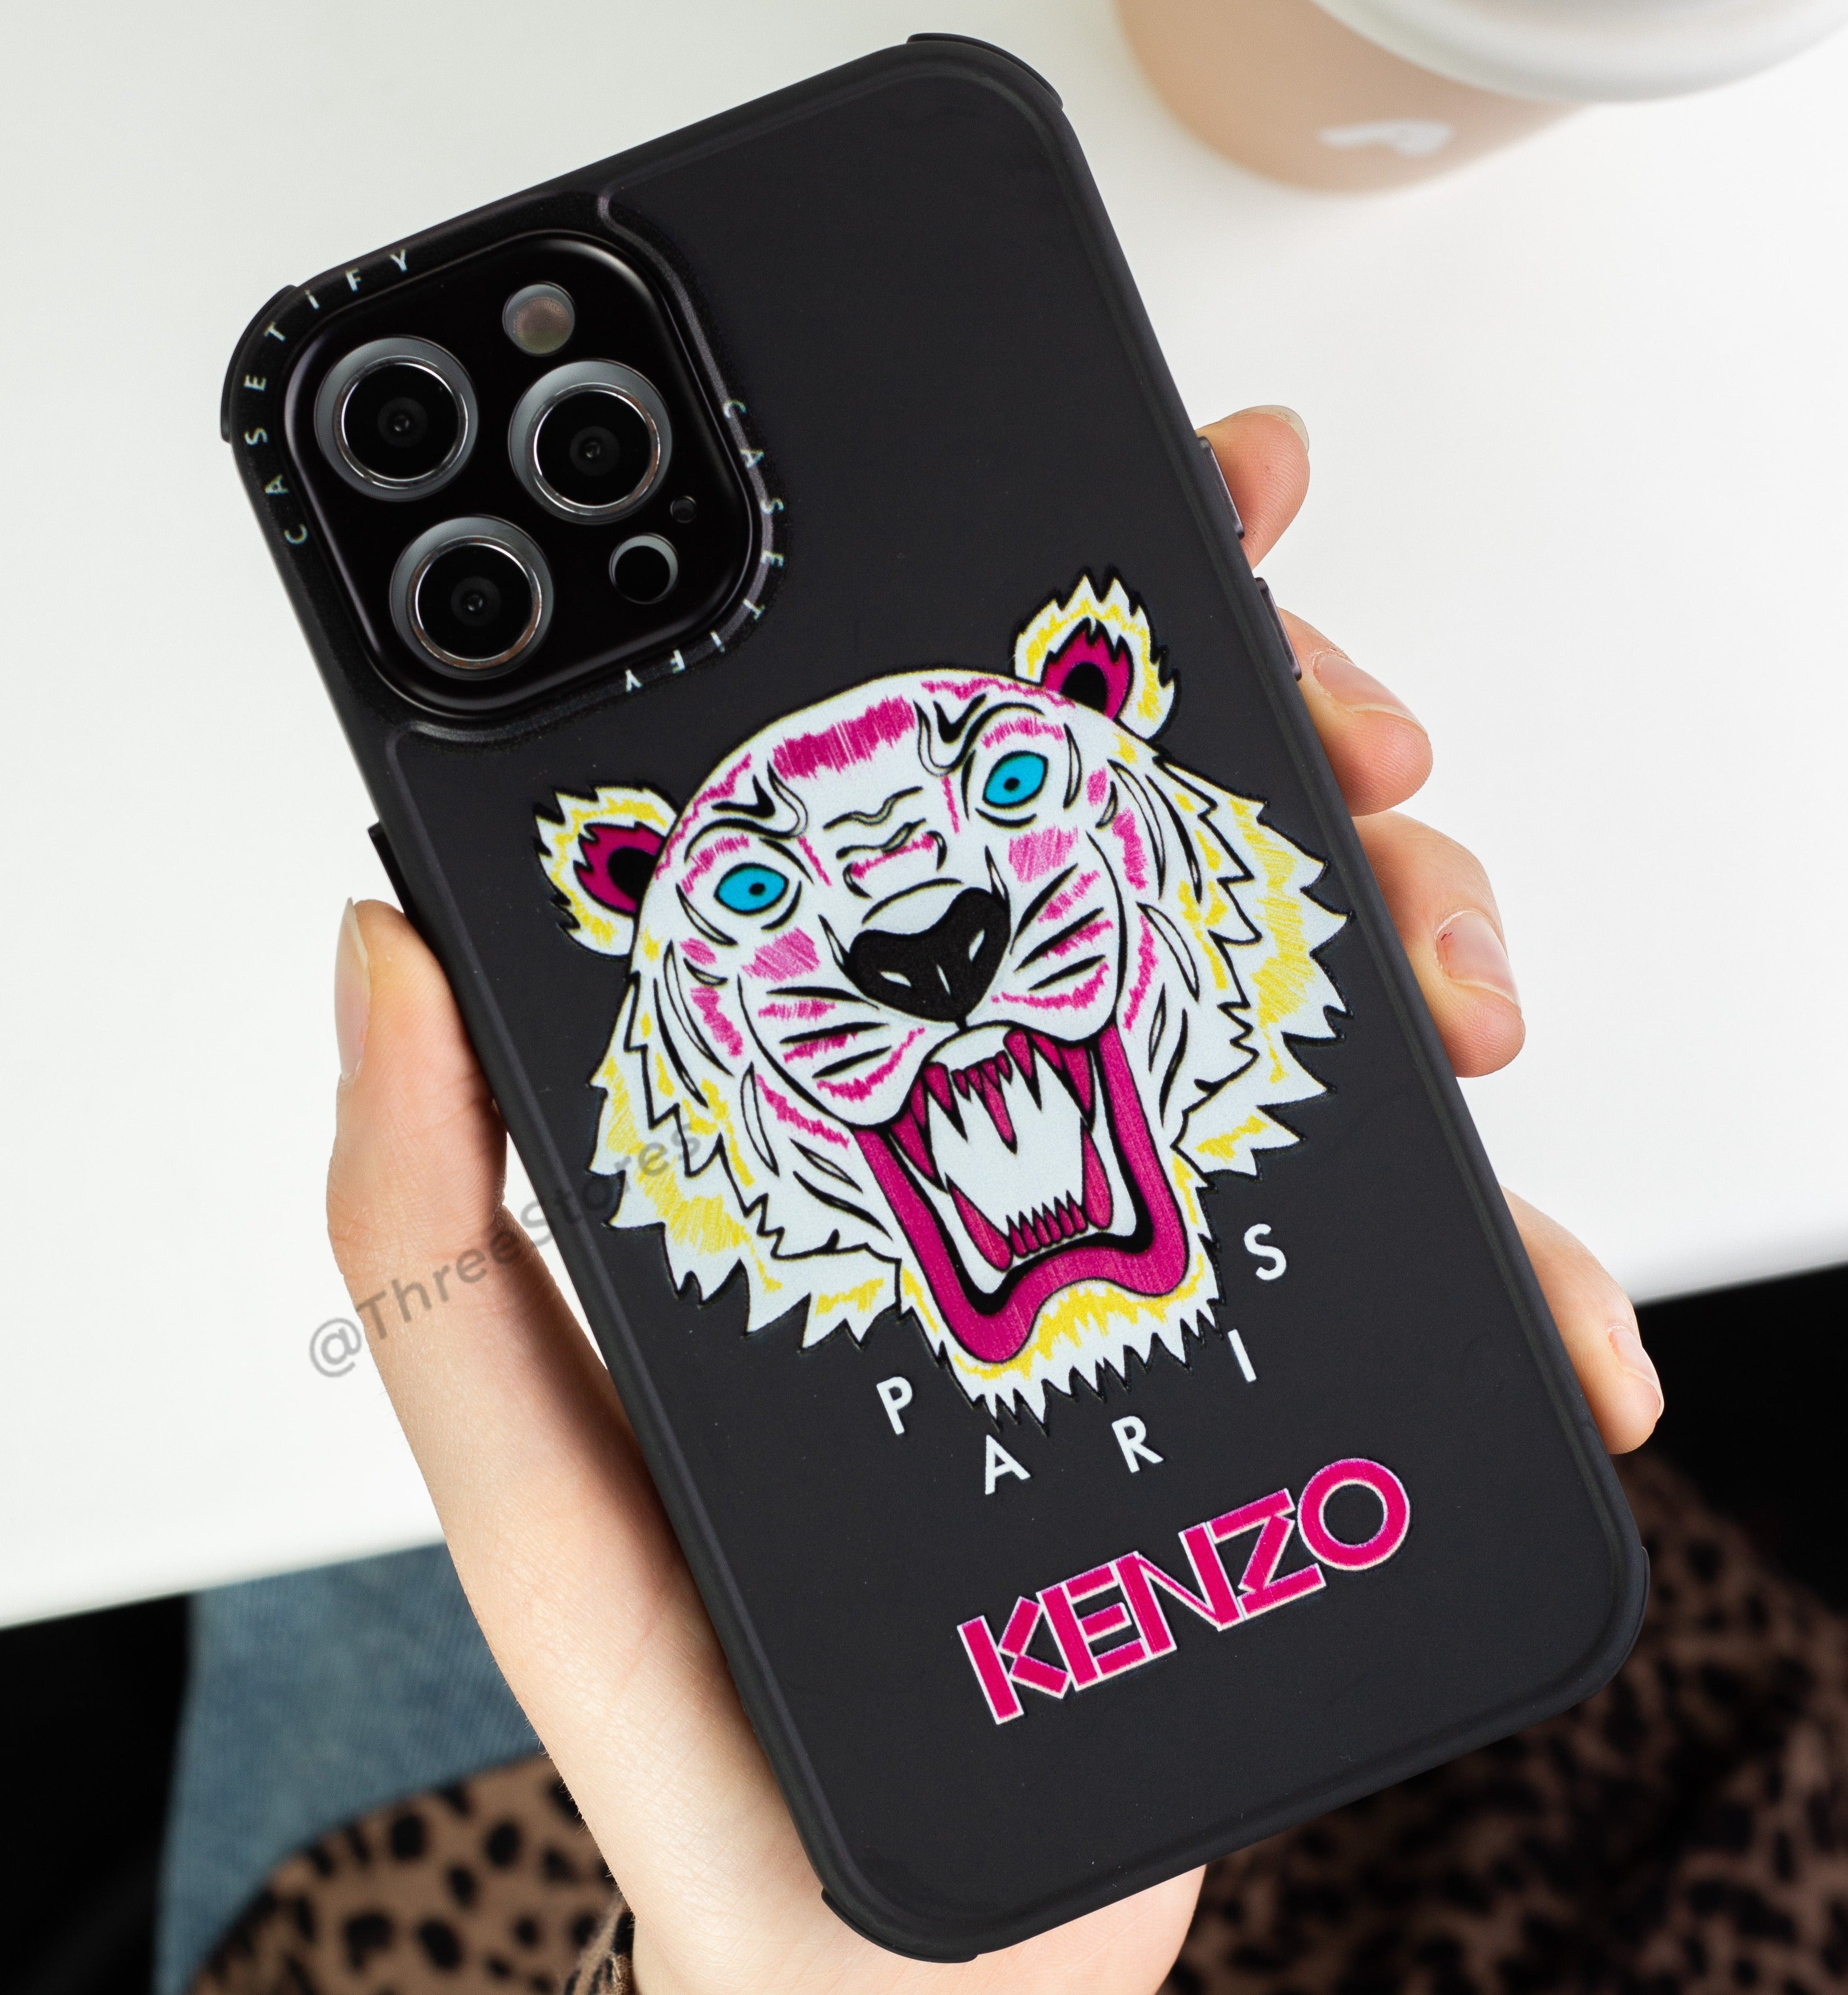 iRon Kenzo Case iPhone 11 Pro Max